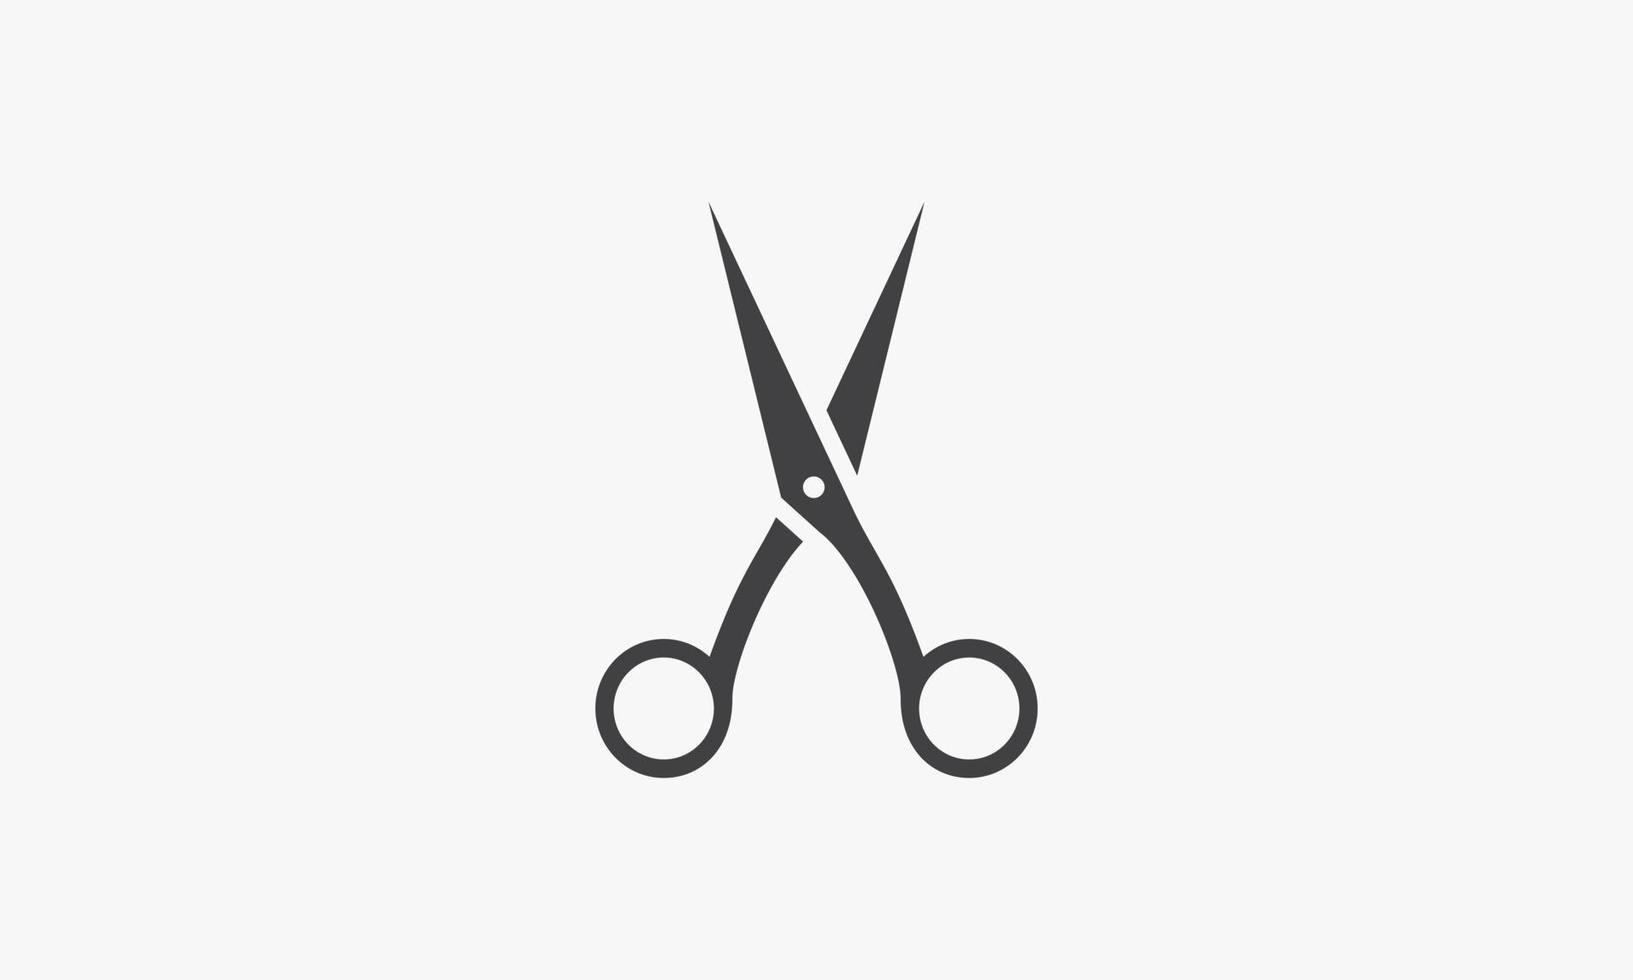 scissors icon.vector illustration on white background. vector